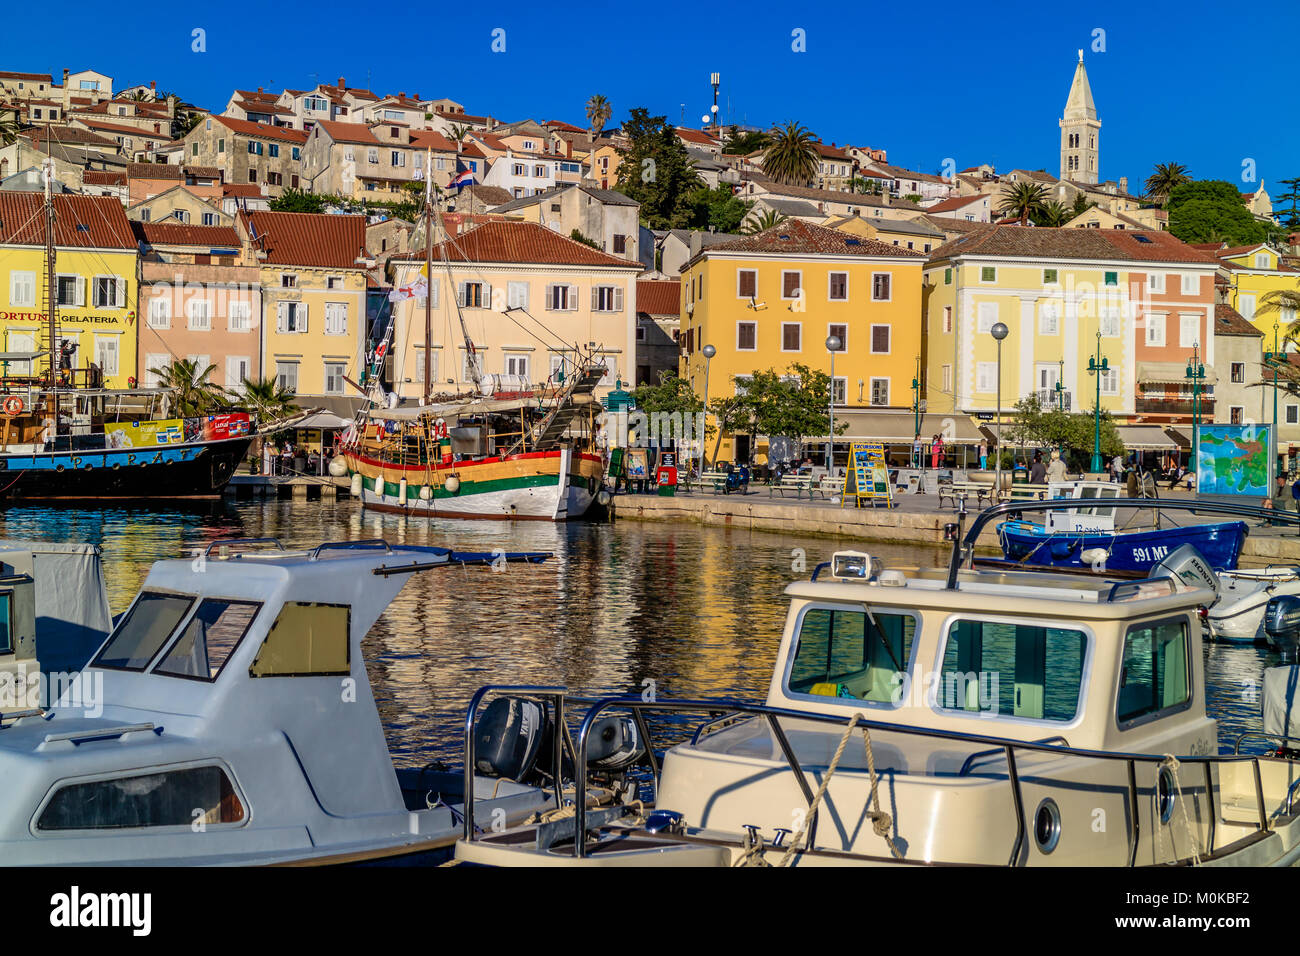 Mali Losinj harbour, on island of Losinj, Croatia. May 2017. Stock Photo